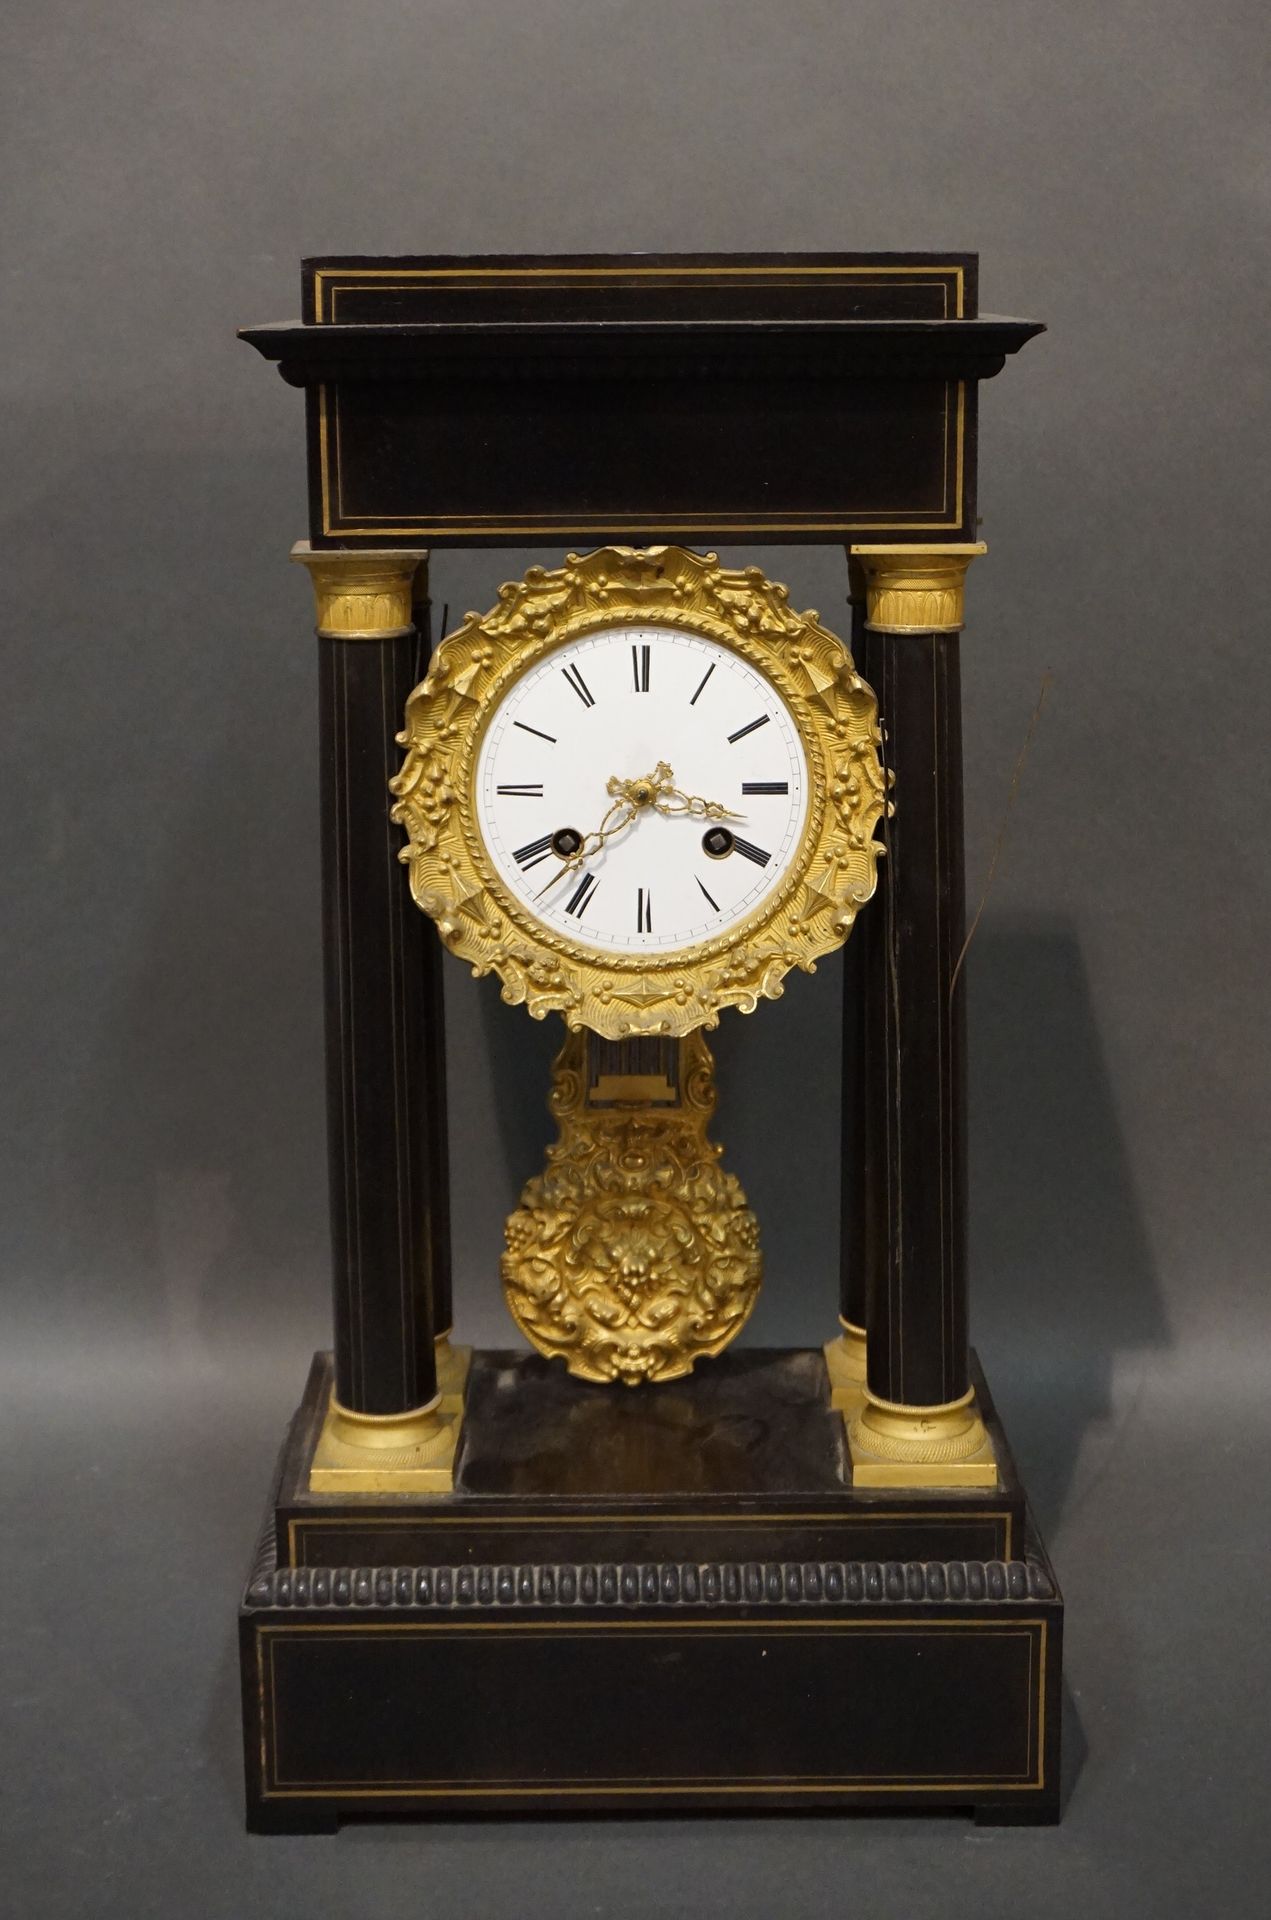 PENDULE Reloj de pórtico del siglo XIX con columnas (accidentes). 50x26x15 cm